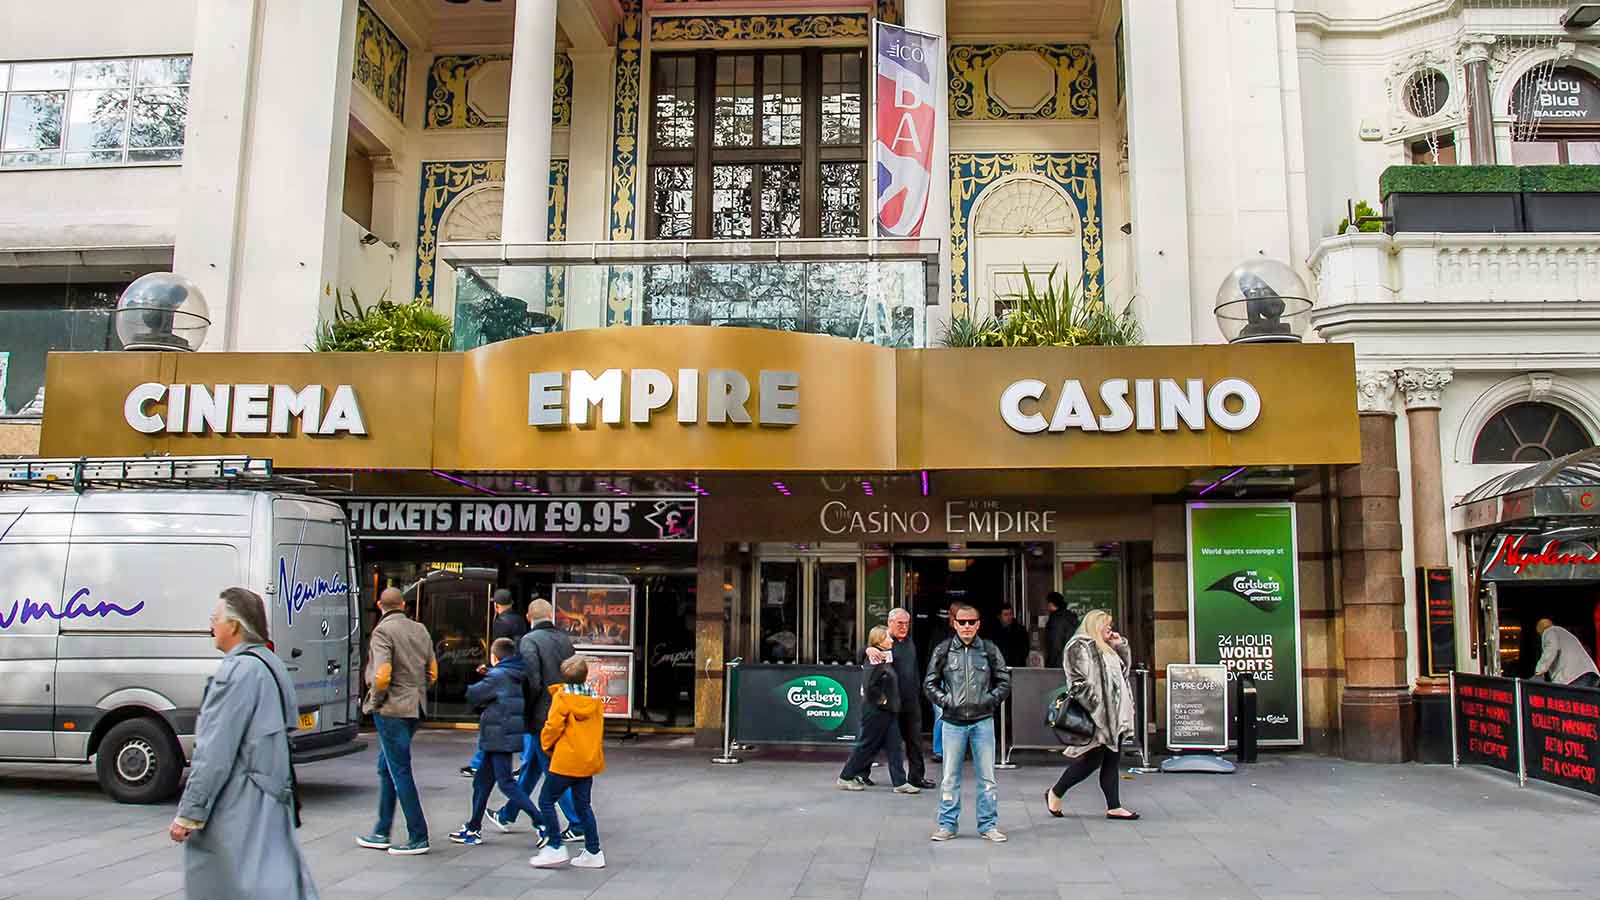 #2. Empire Casino – the best casino in London for Blackjack